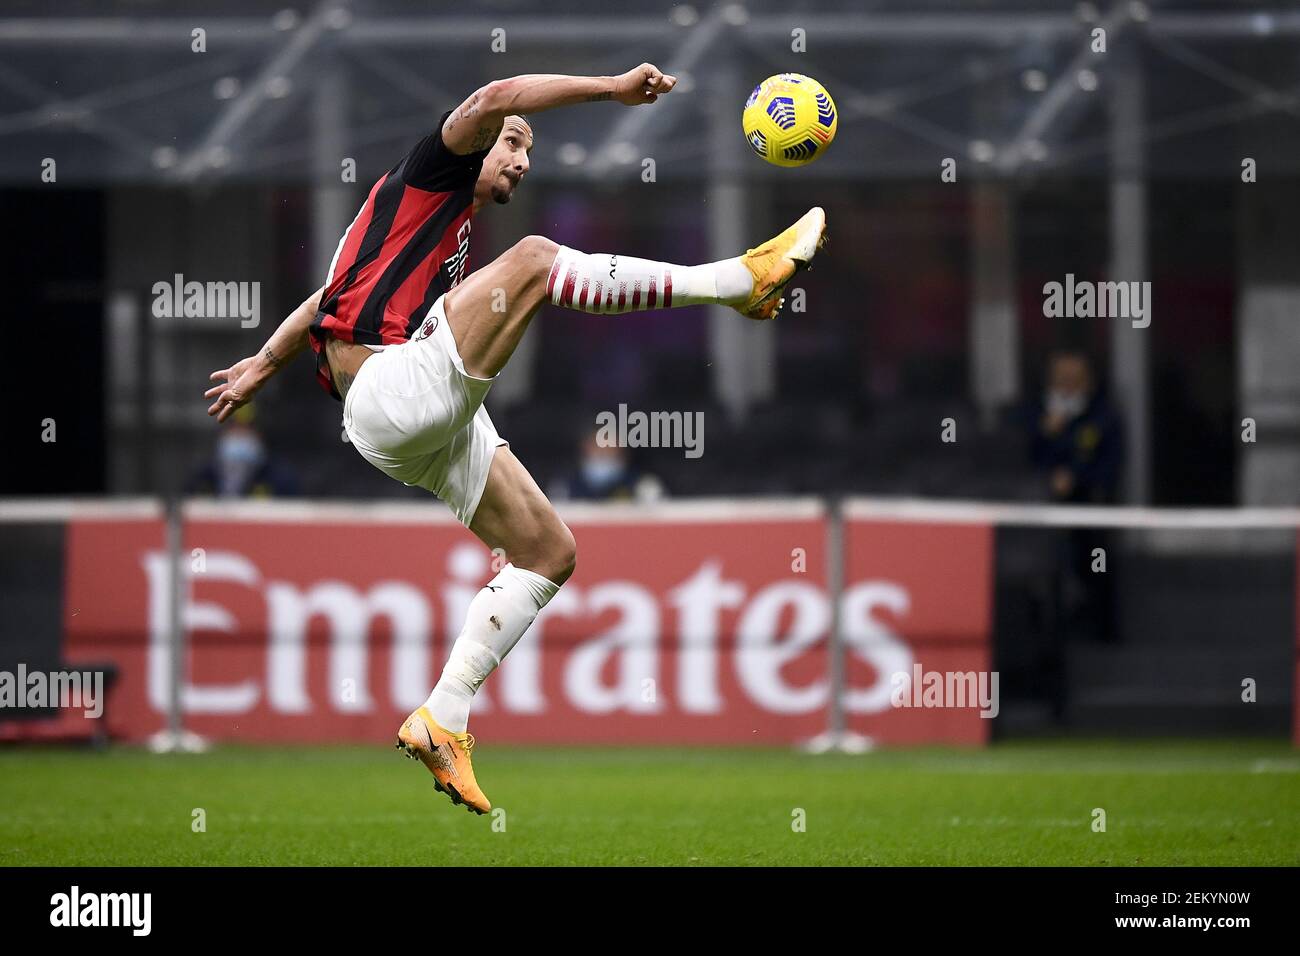 MILAN, ITALIE - 08 novembre 2020: Zlatan Ibrahimovic de l'AC Milan en action pendant la série UN match de football entre l'AC Milan et le Hellas Verona FC. (Photo de NicolÃ² Campo/Sipa USA) Banque D'Images